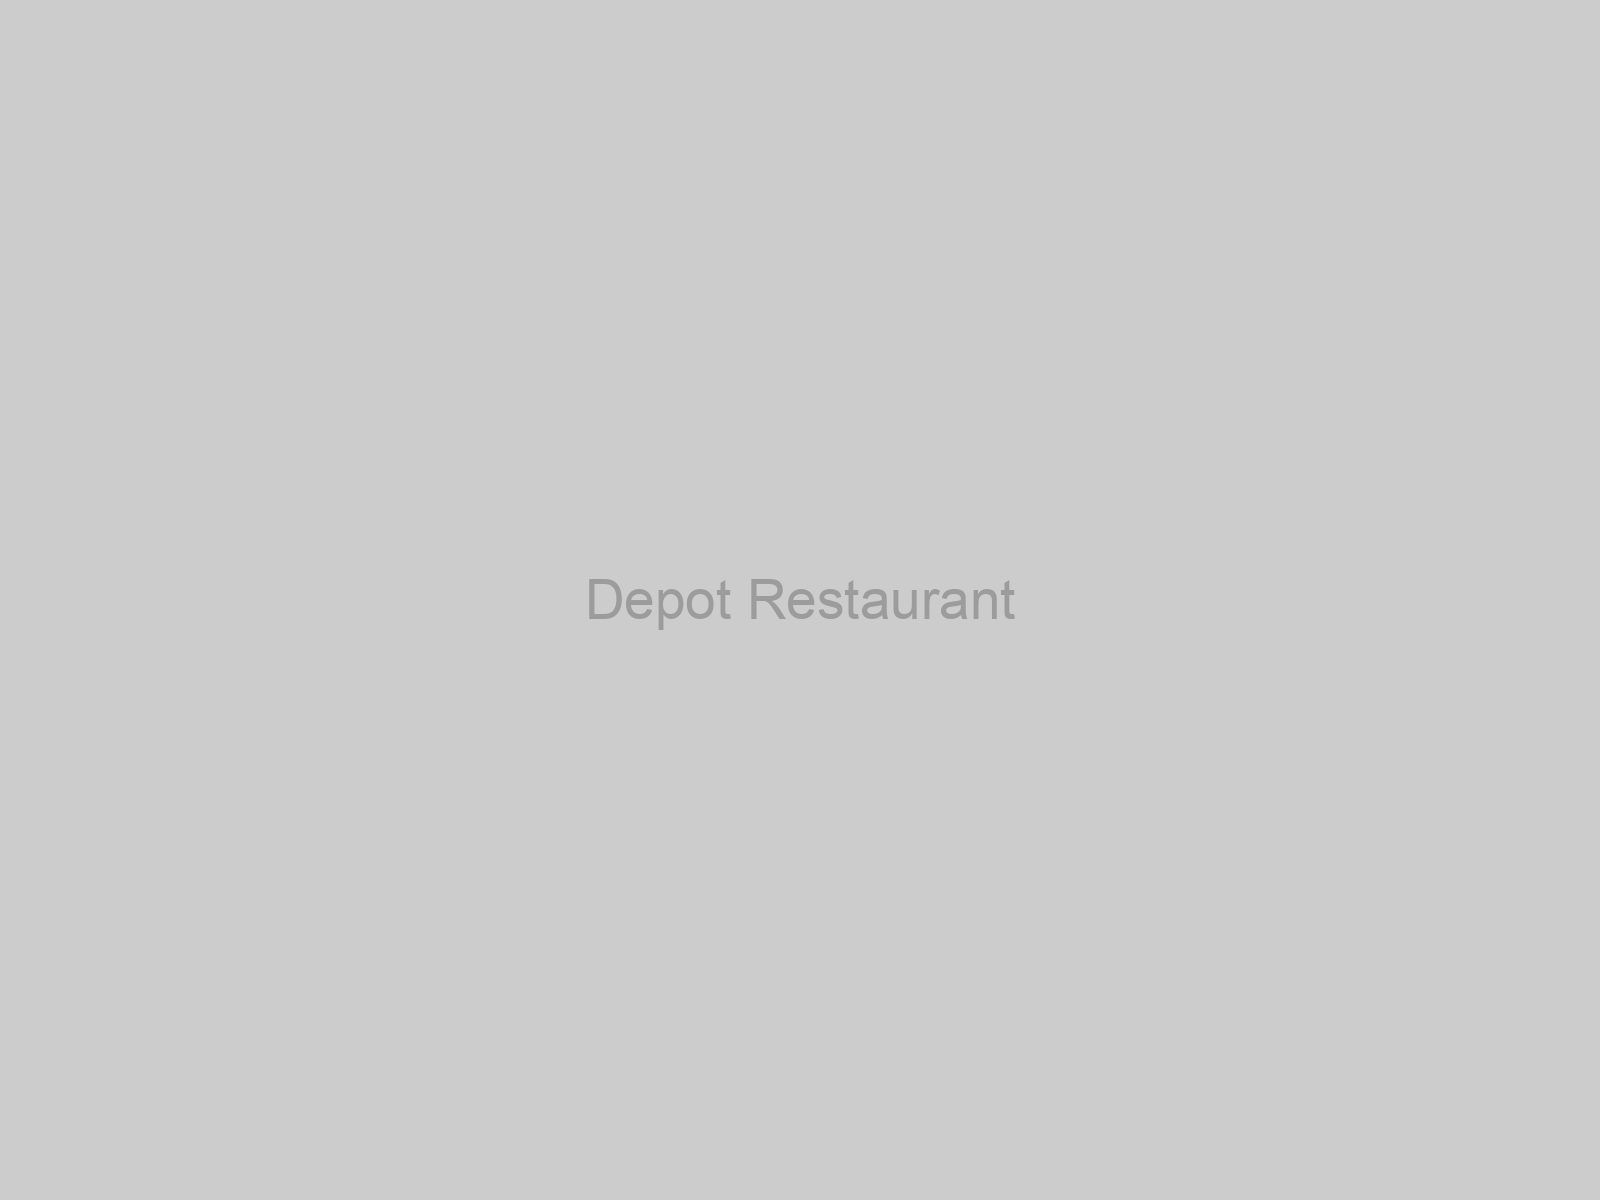 Depot Restaurant